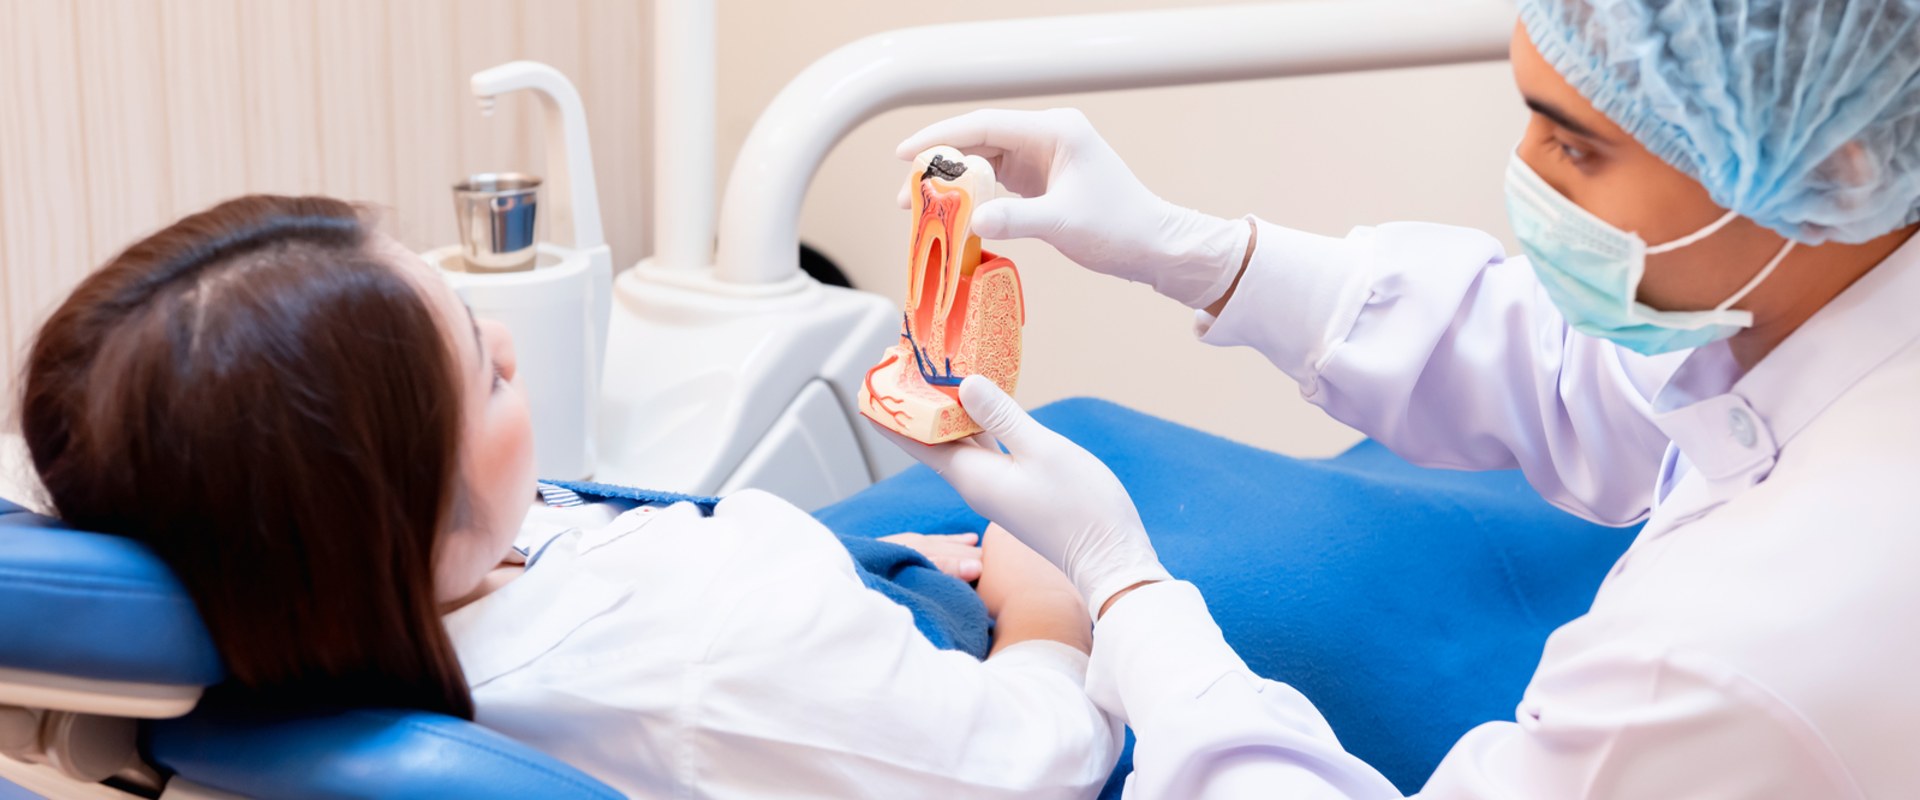 Dental Implants Made Easier With Laser Dentistry: A Breakthrough In Monroe, LA